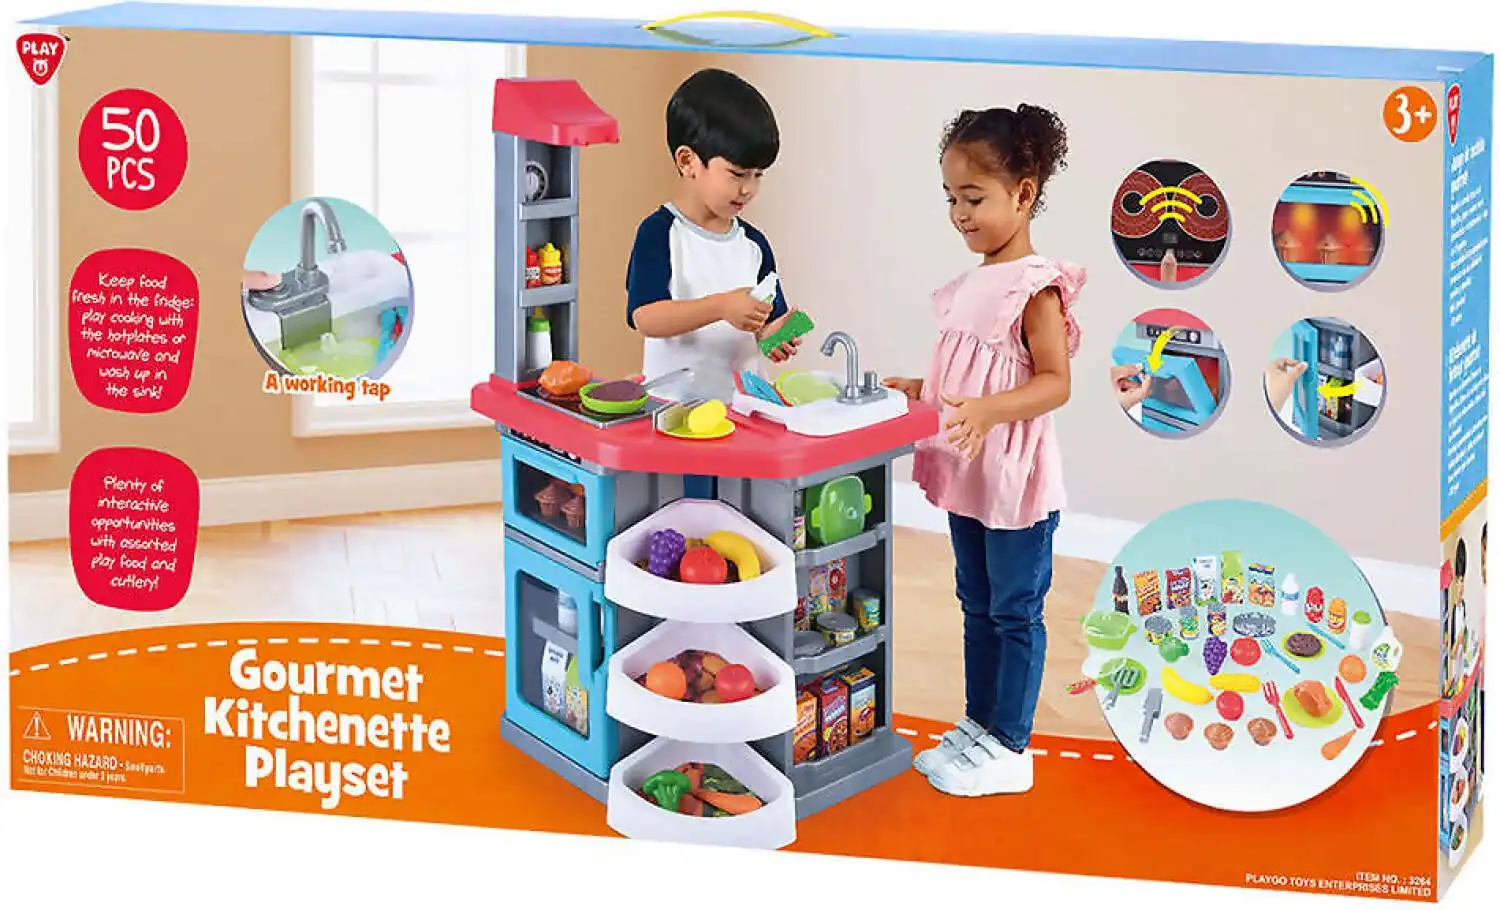 Playgo Toys Ent. Ltd. - Gourmet Kitchenette Set